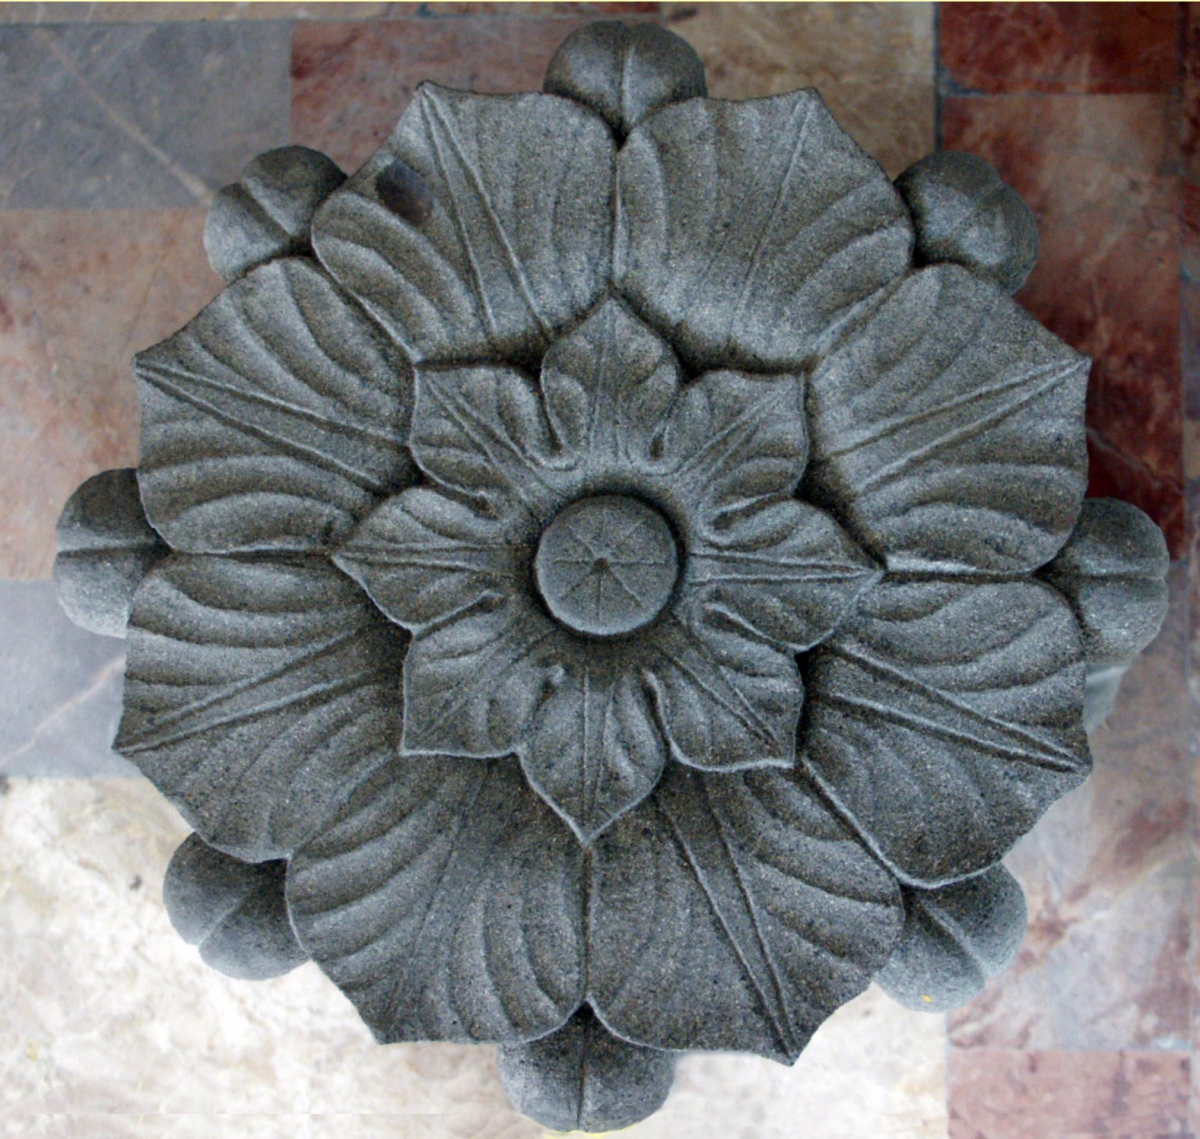 Decoration of Pietra Macigno of Greve